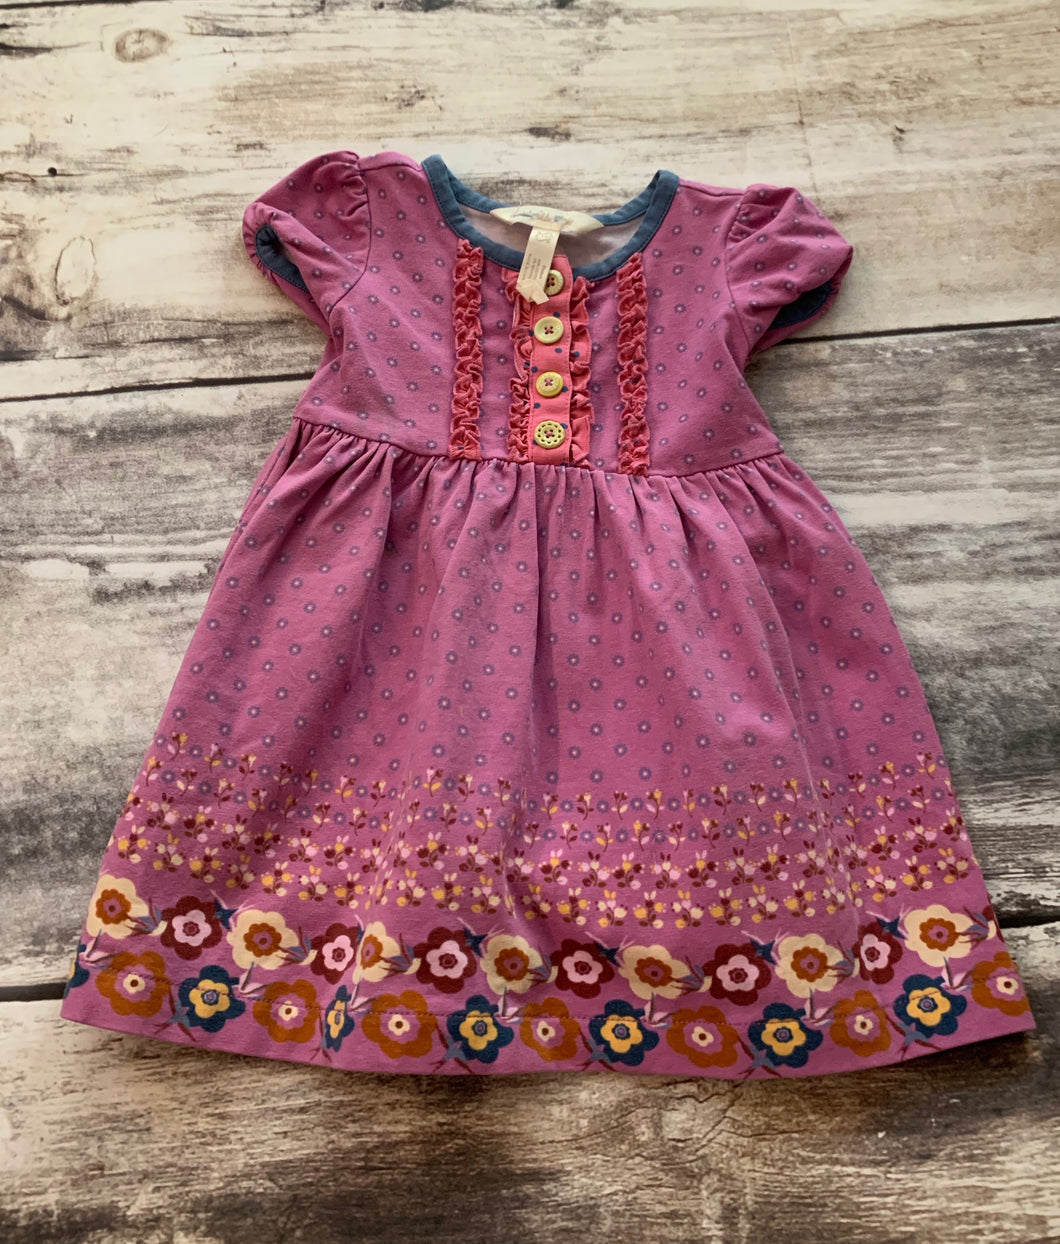 Matilda Jane 6-12 month dress